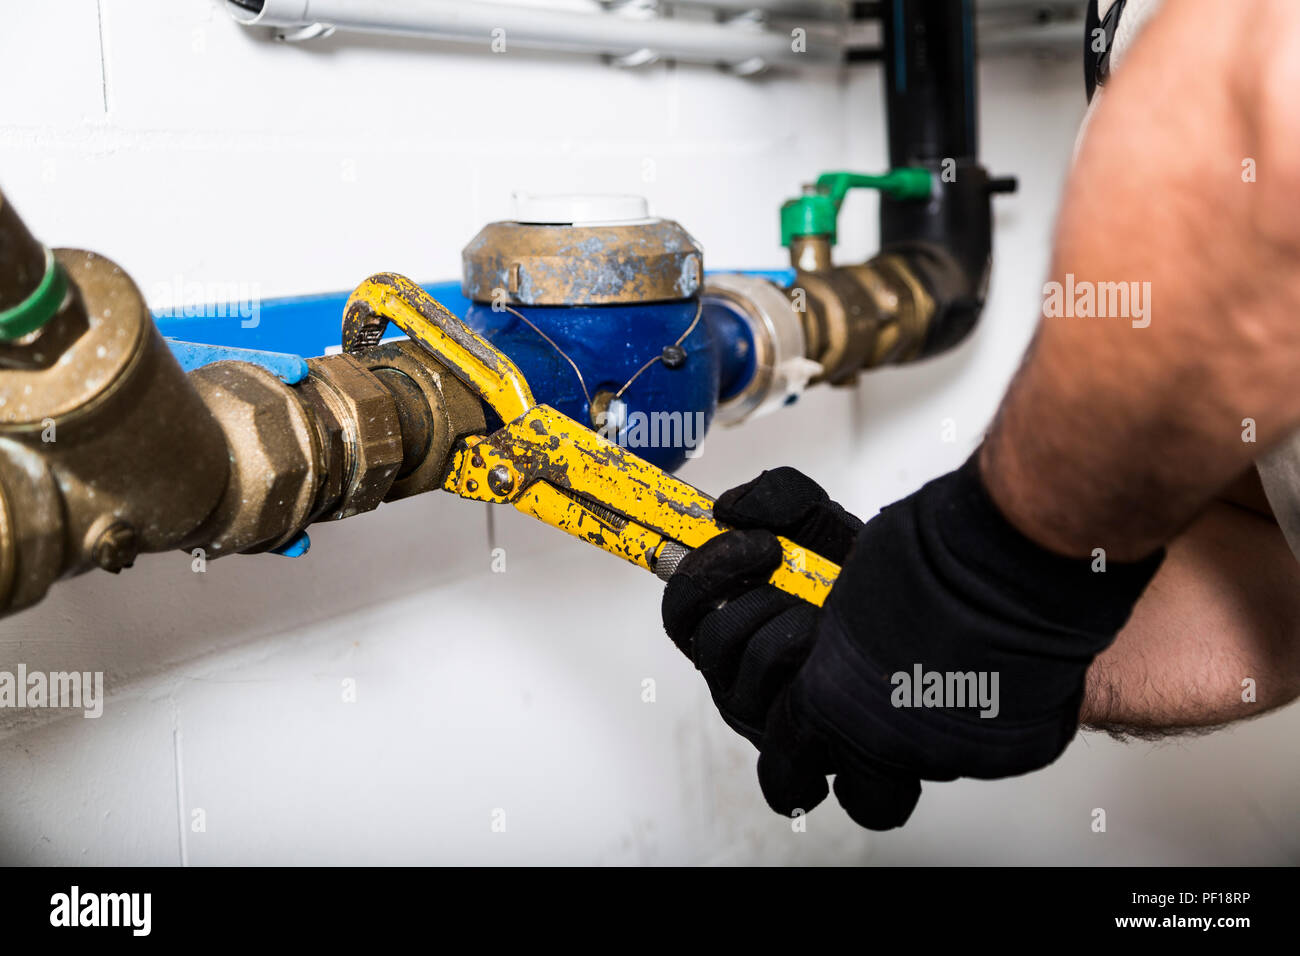 Plumber repairing metallic water pipes with manometer Stock Photo